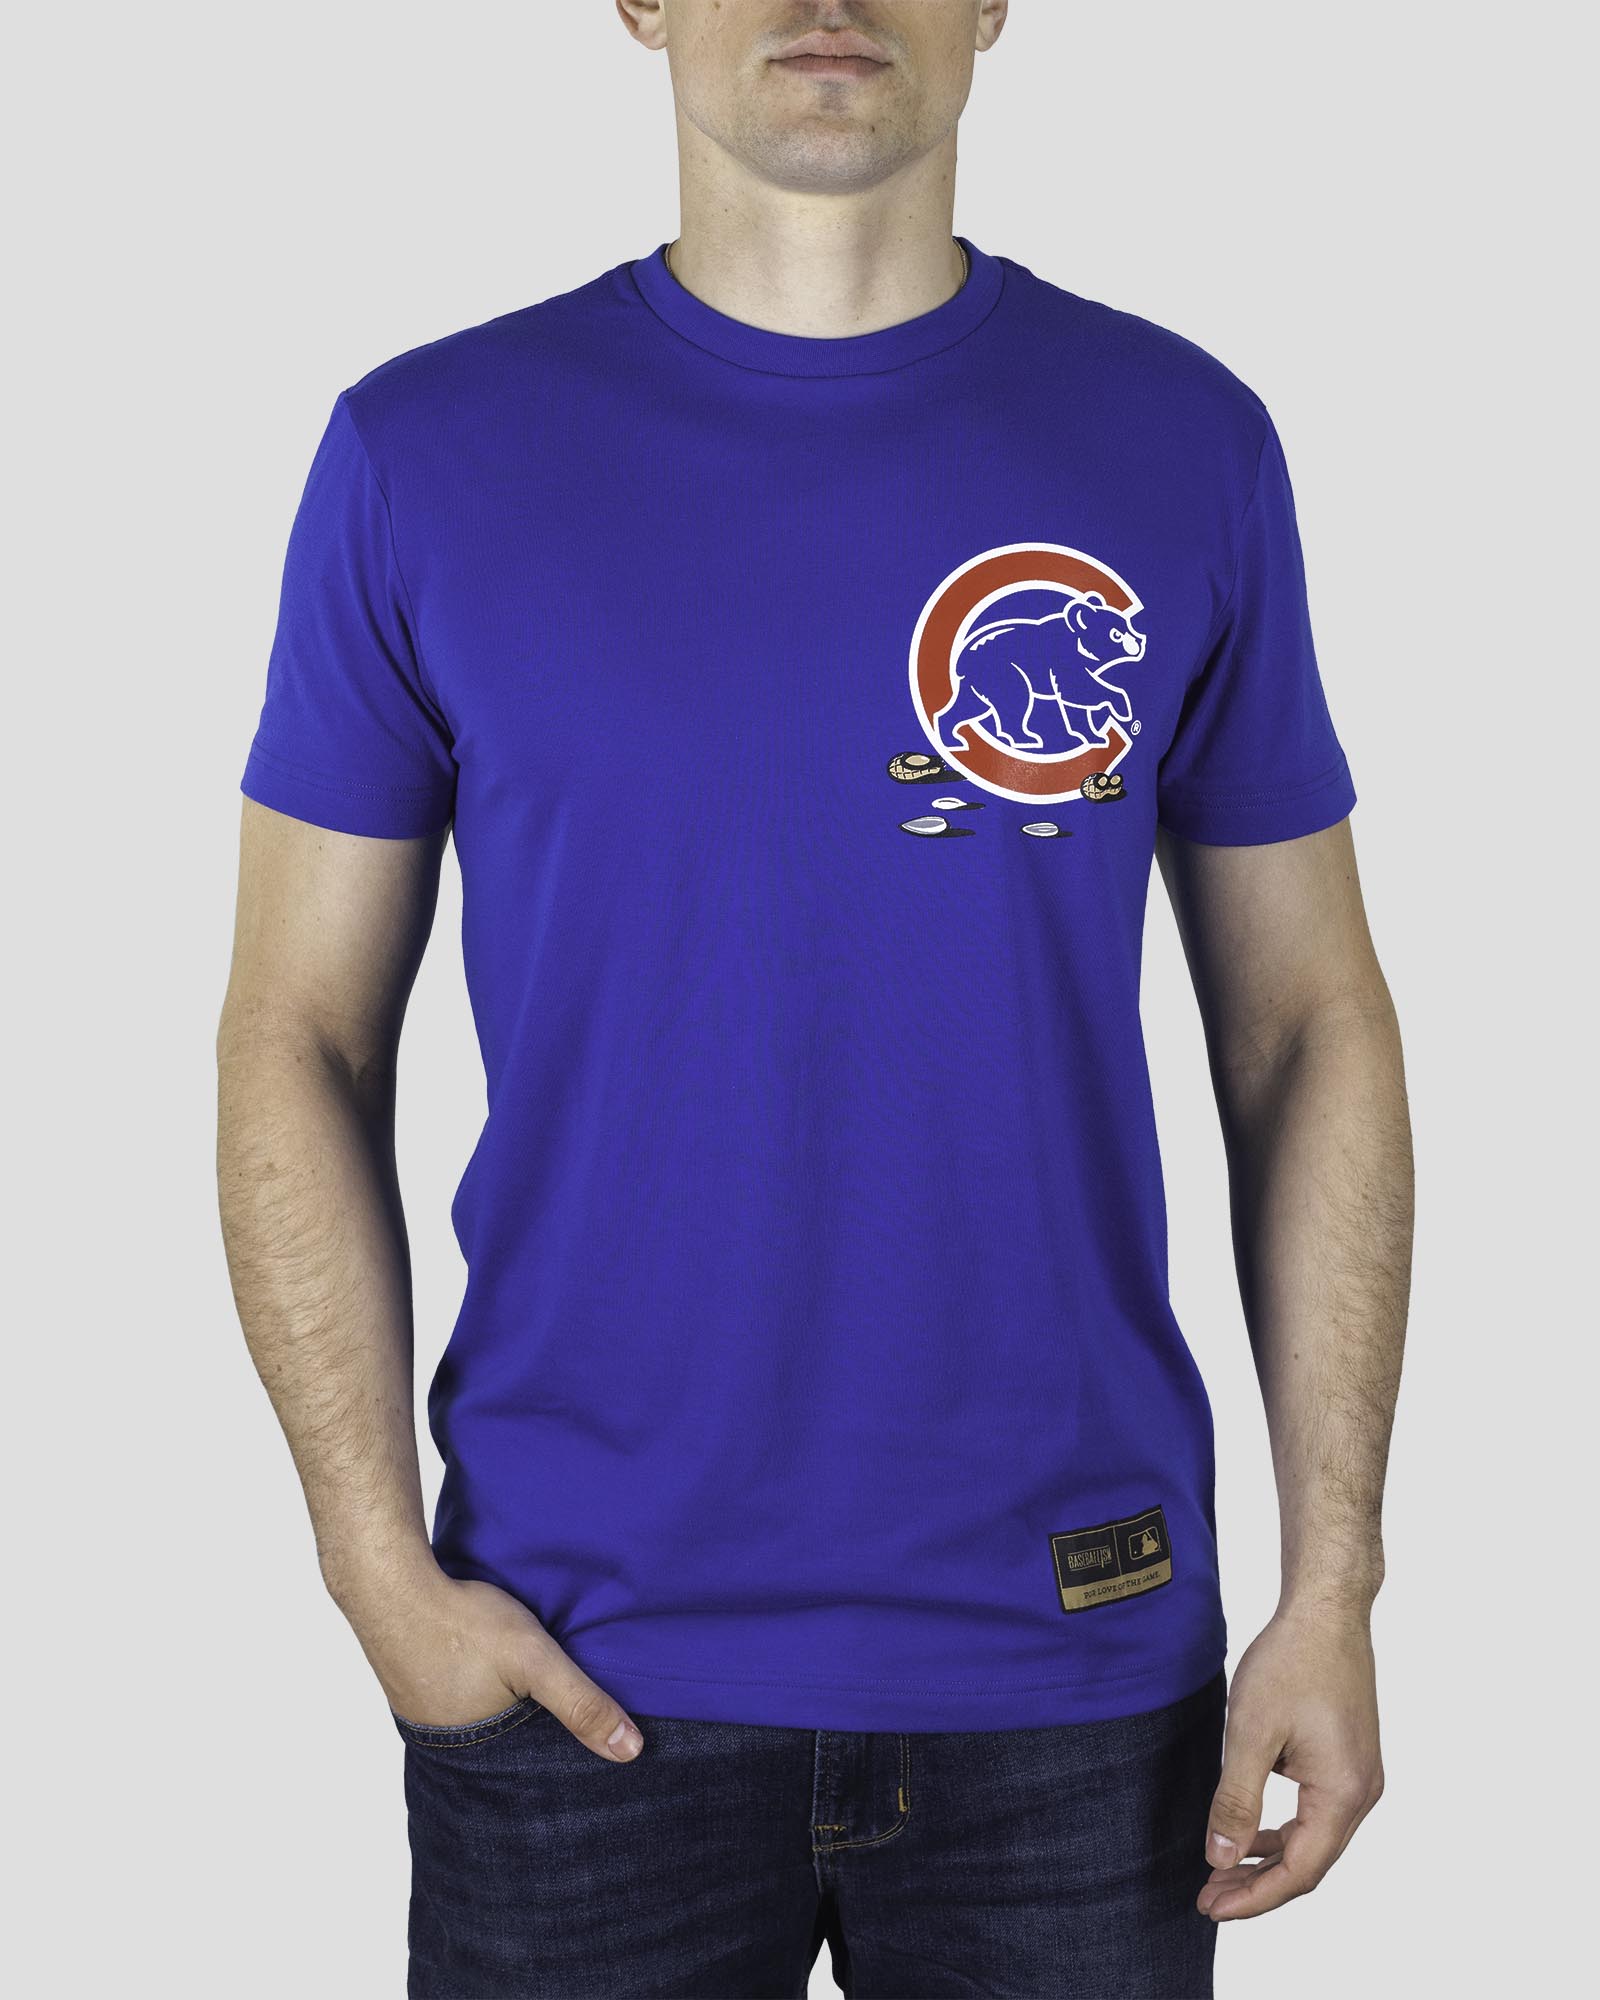 Bluejack Clothing Cubs Baseball T-Shirt 2376